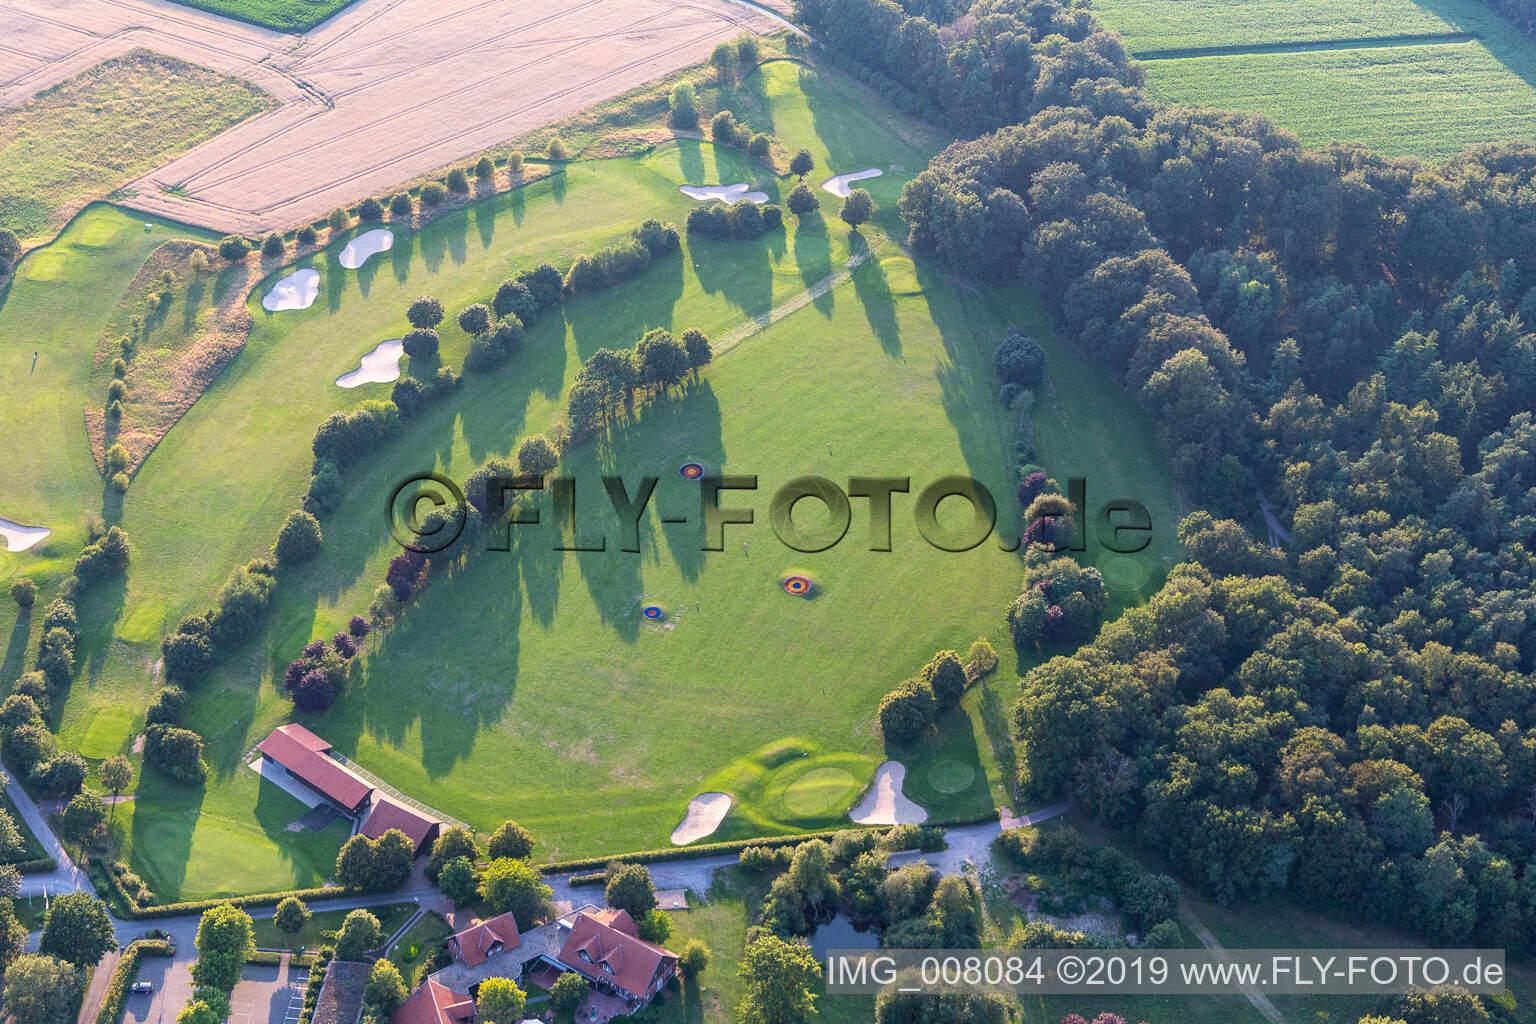 Oblique view of Golf and Country Club Coesfeld eV in Coesfeld in the state North Rhine-Westphalia, Germany